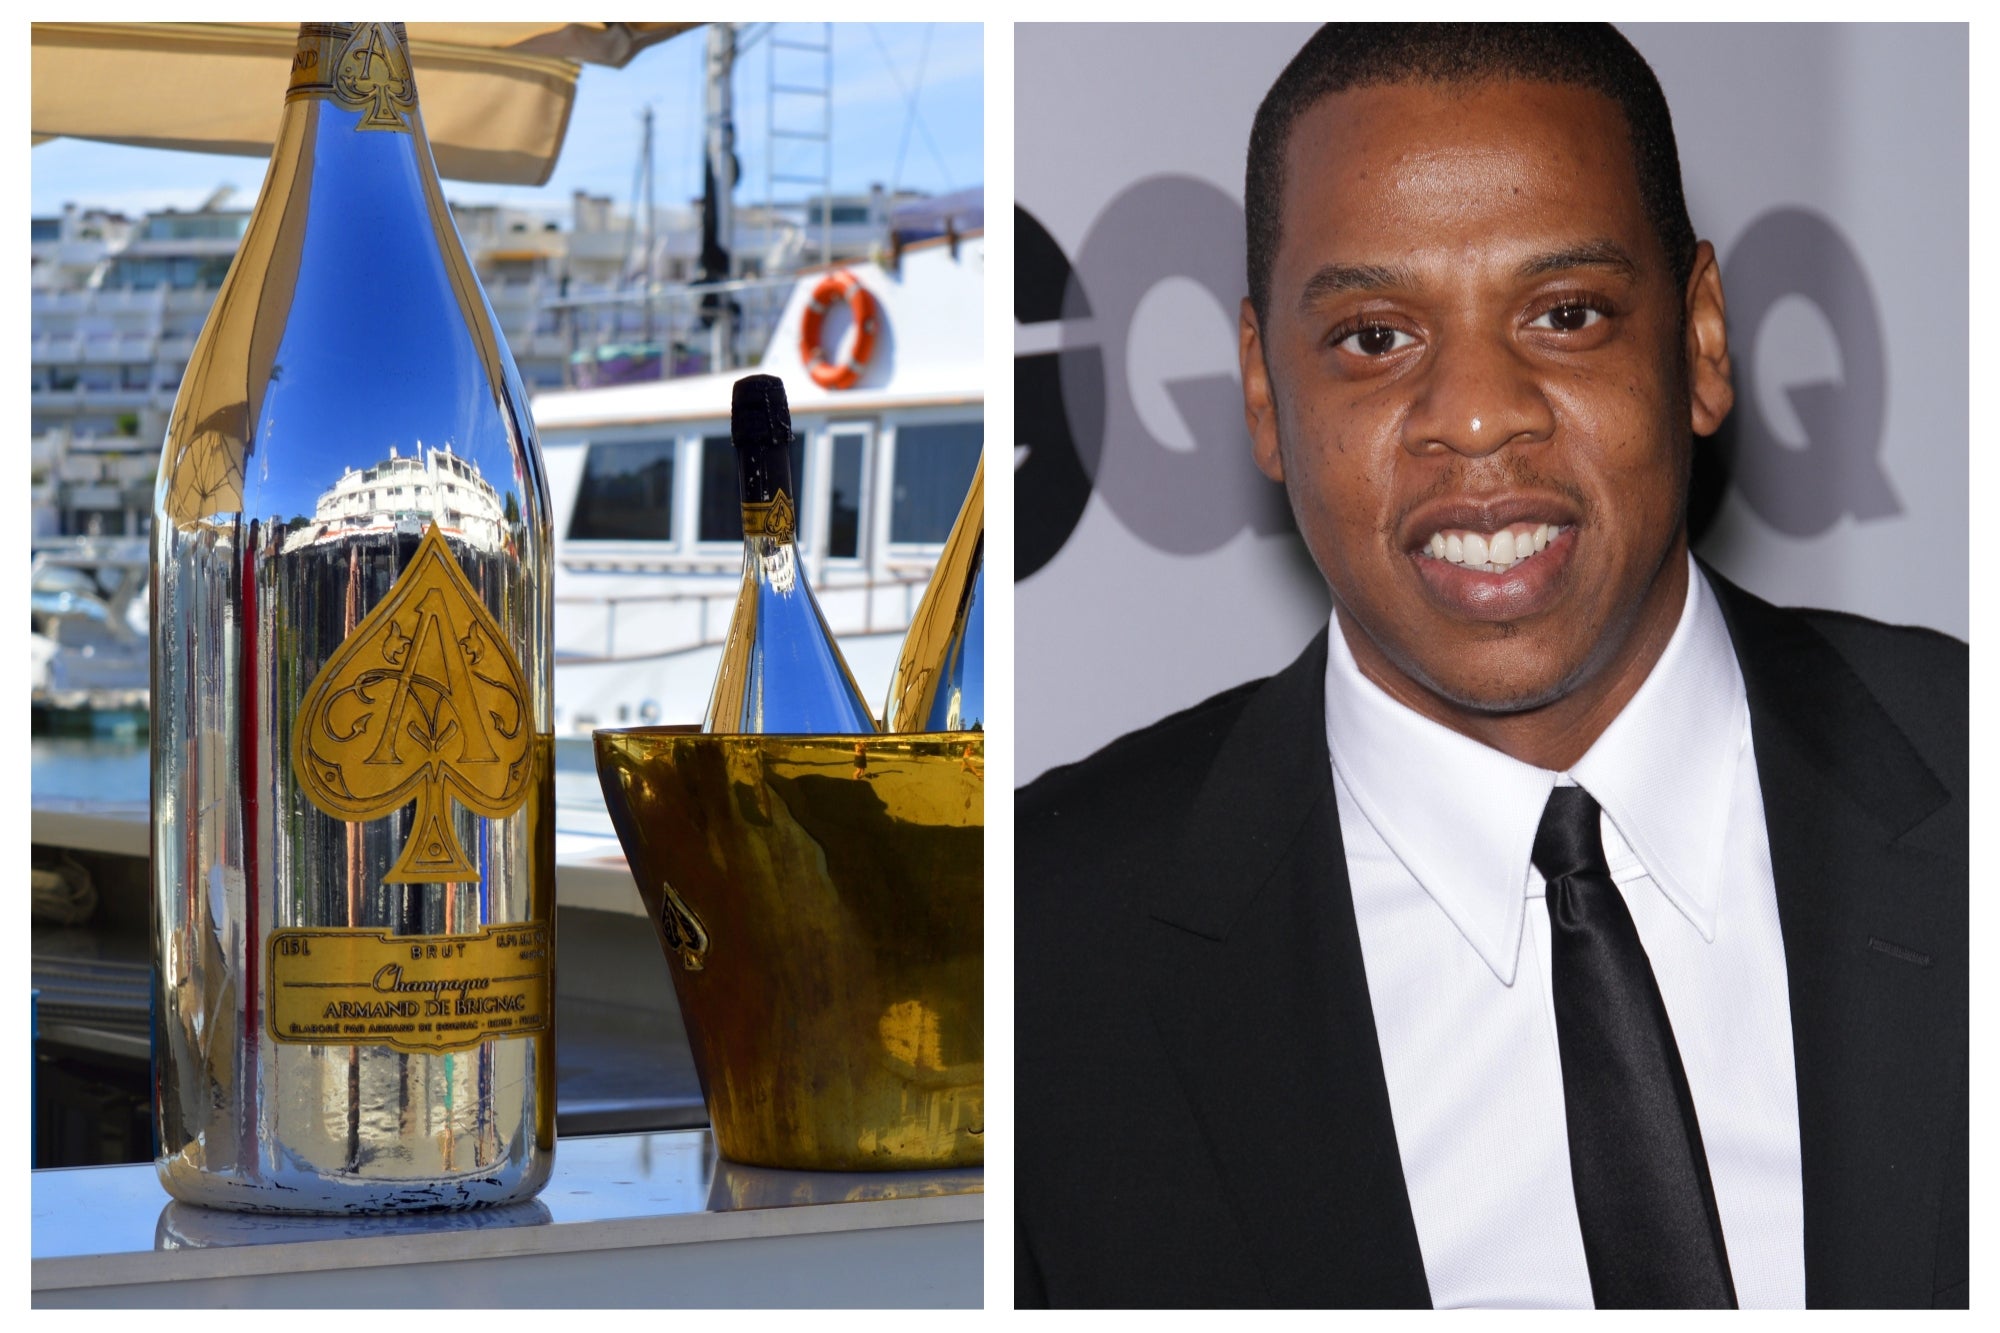 Jay-Z Sells Half of His Armand de Brignac Champagne Brand to LVMH